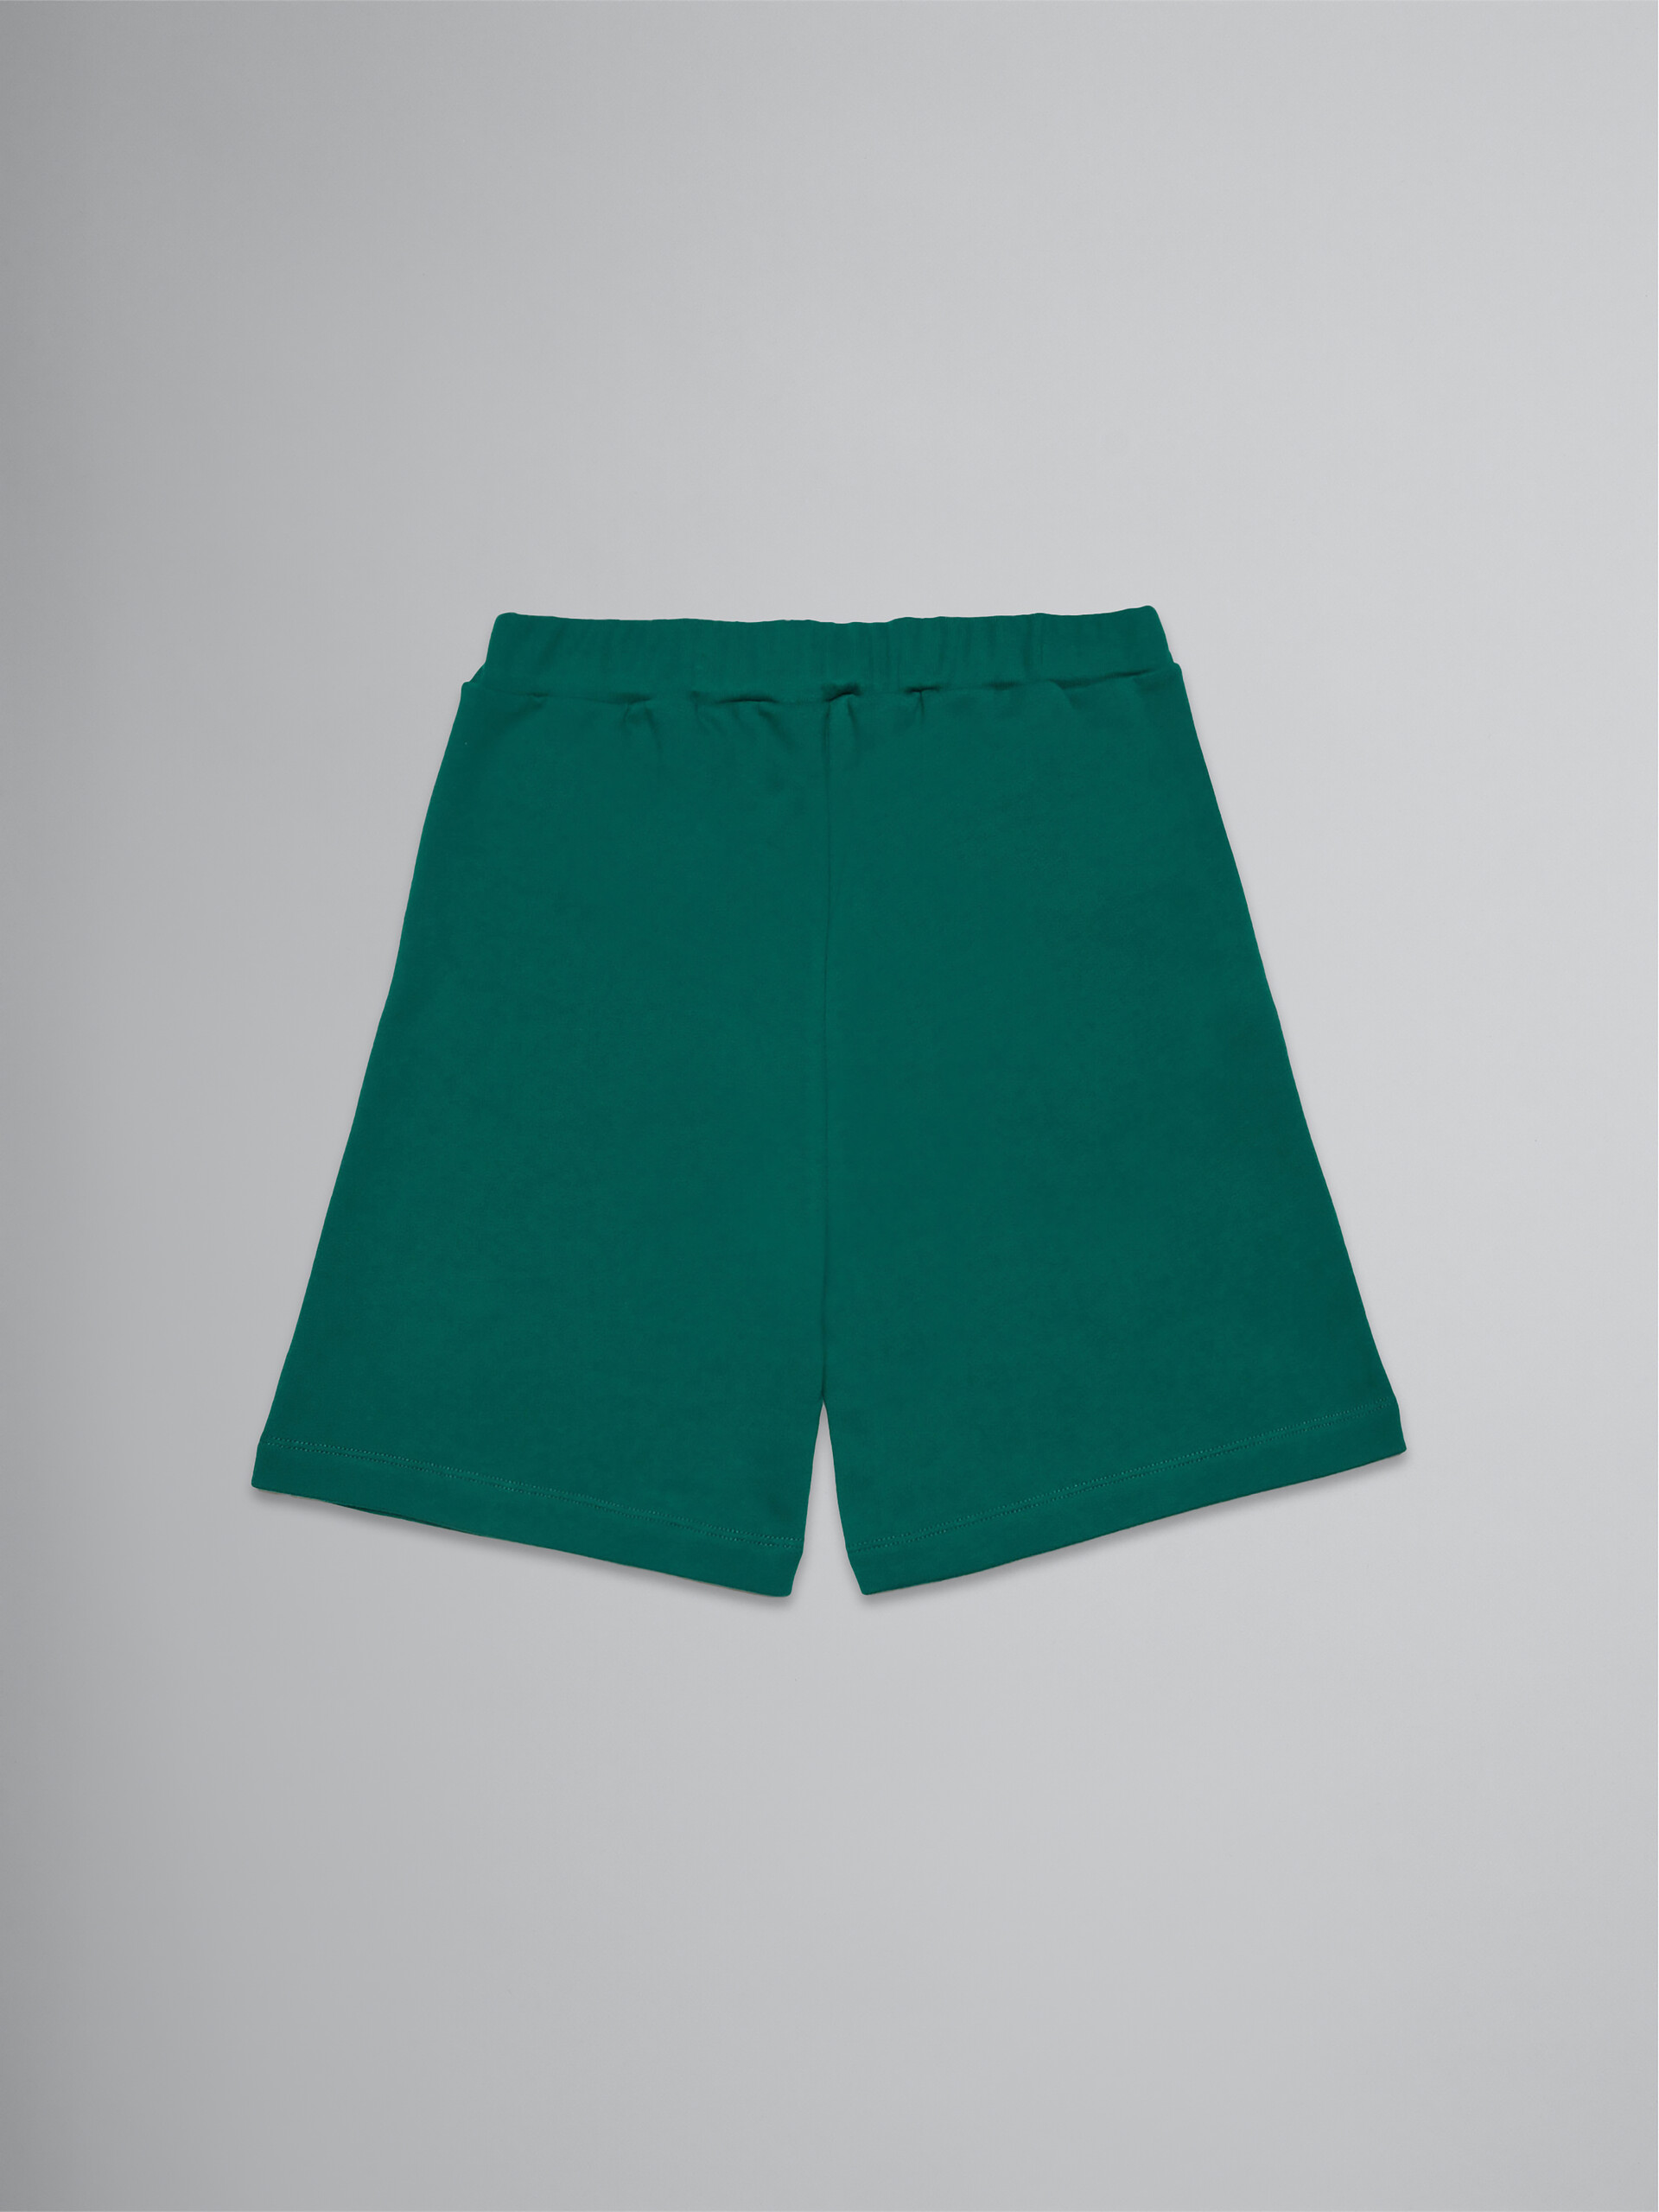 Pantalón corto verde de felpa con logotipo - Pantalones - Image 2